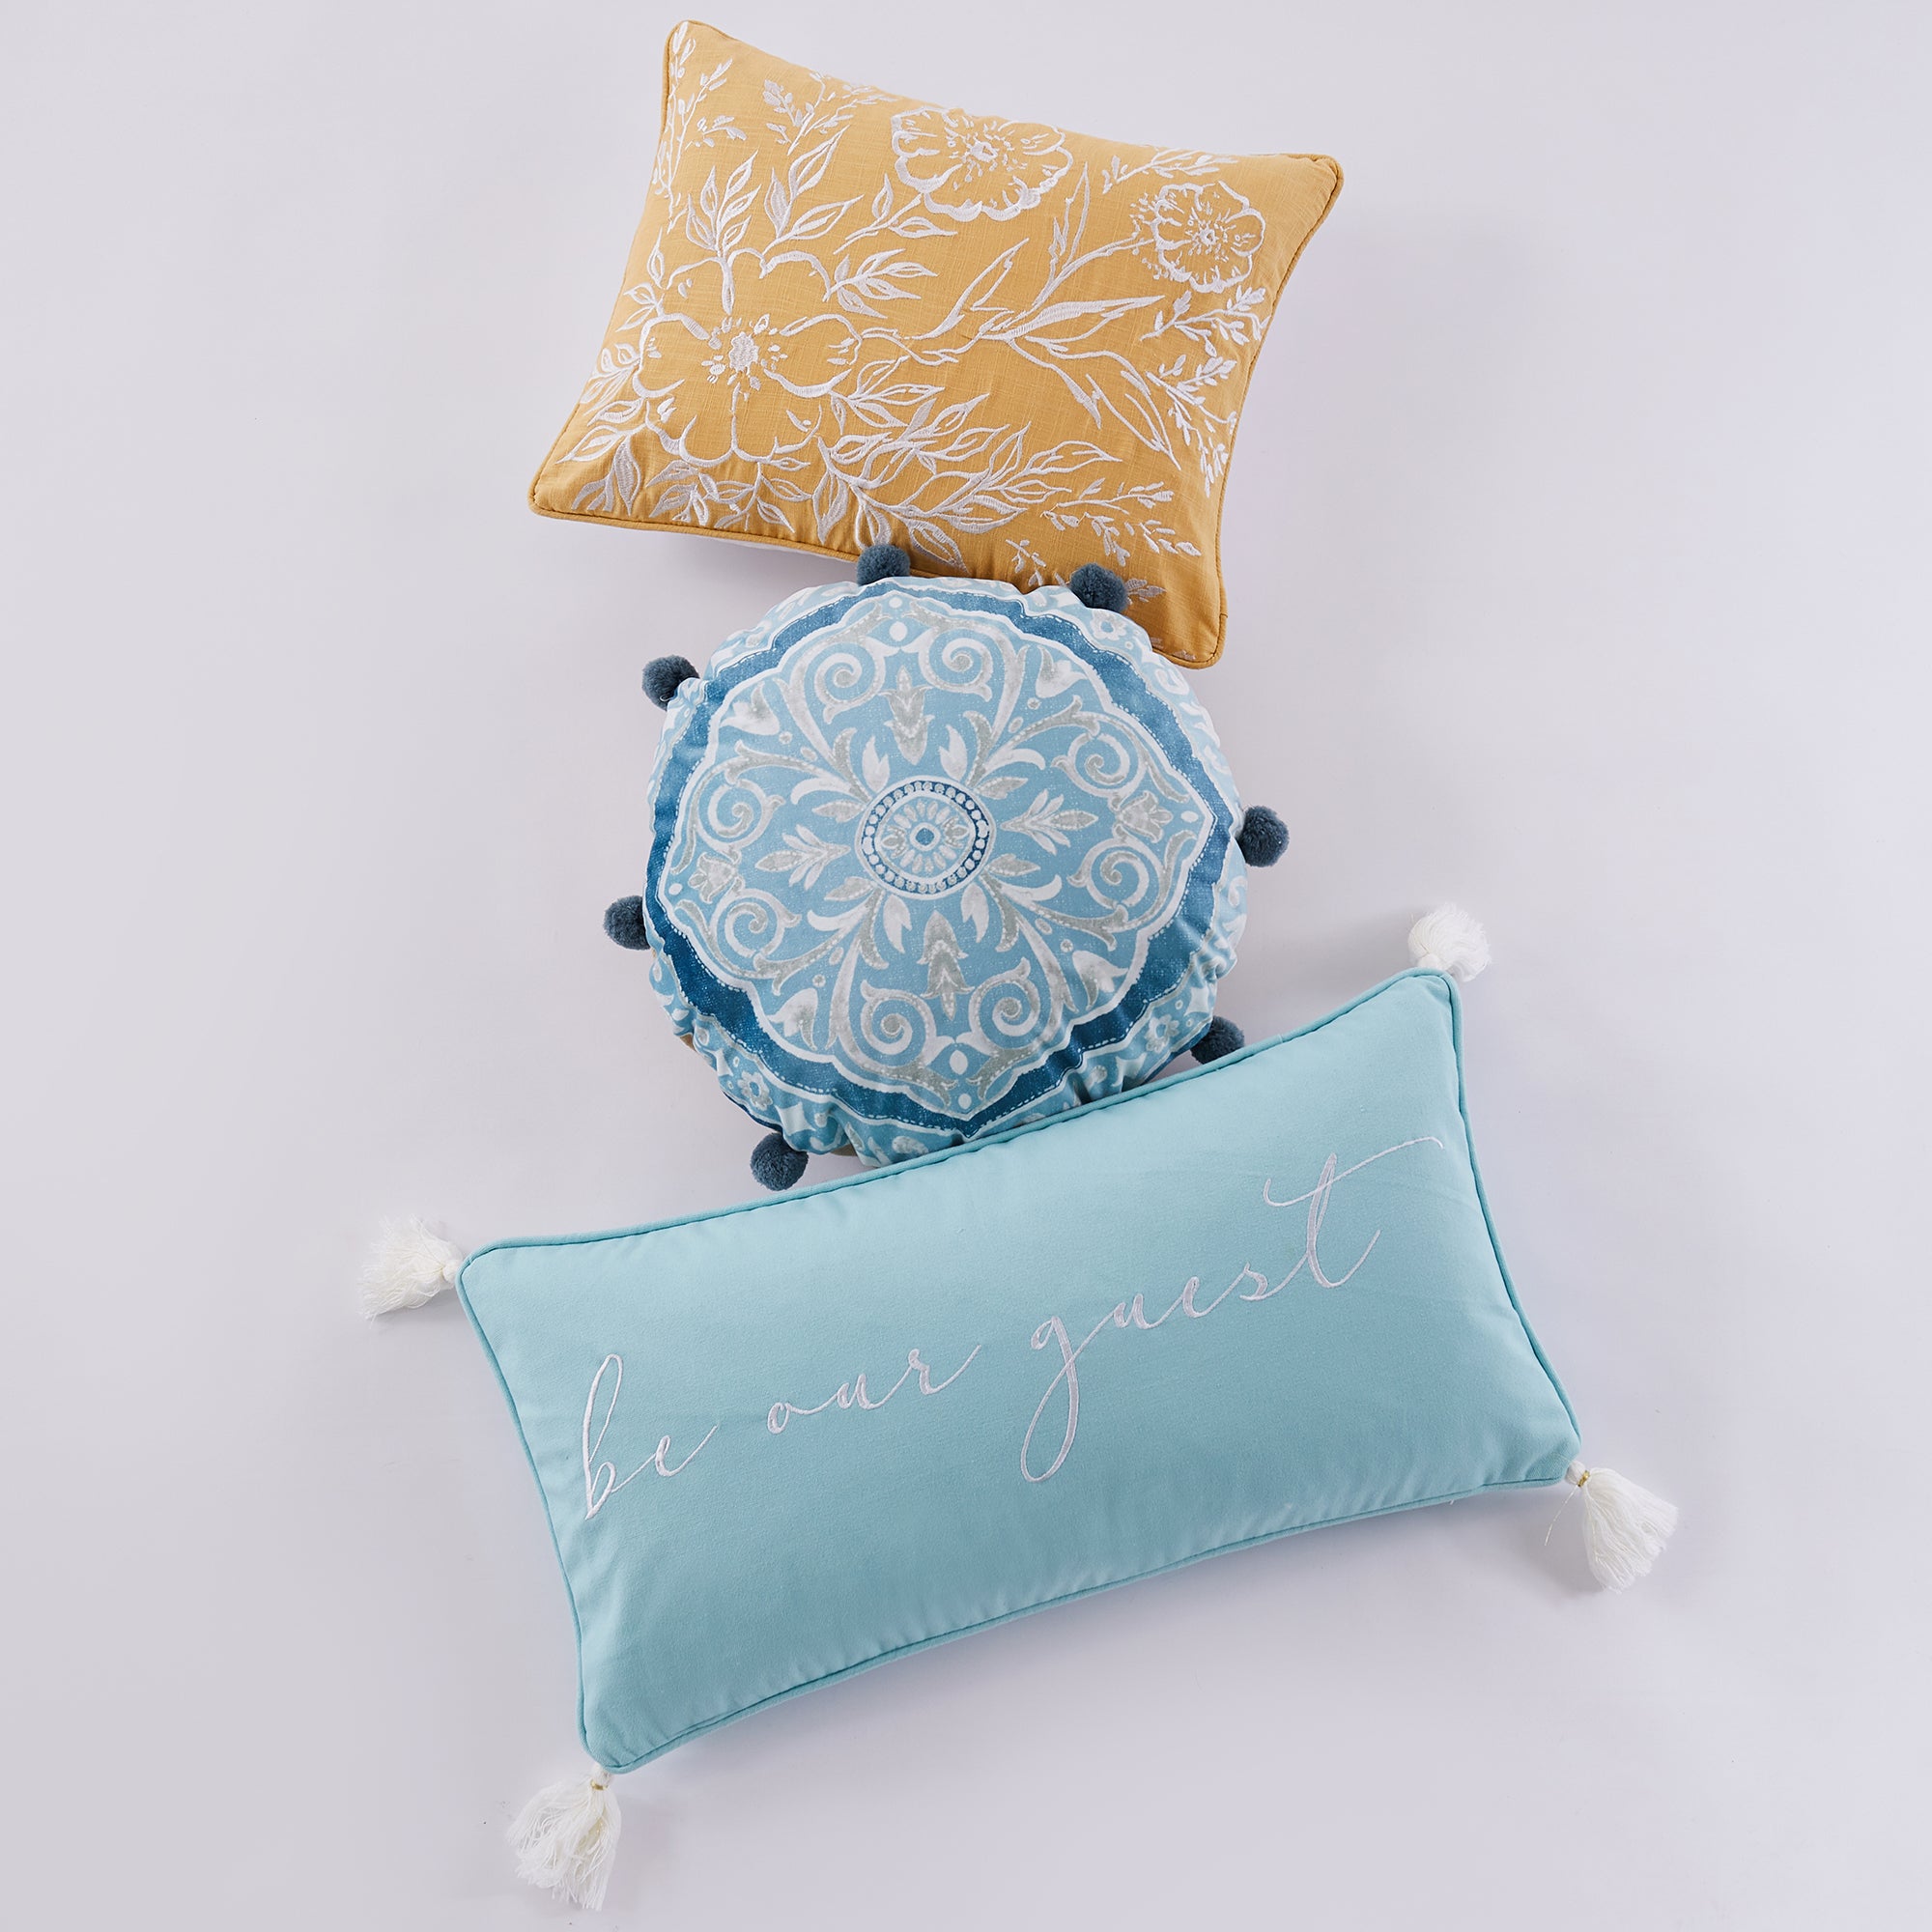 Alita Ochre Embroidered Pillow